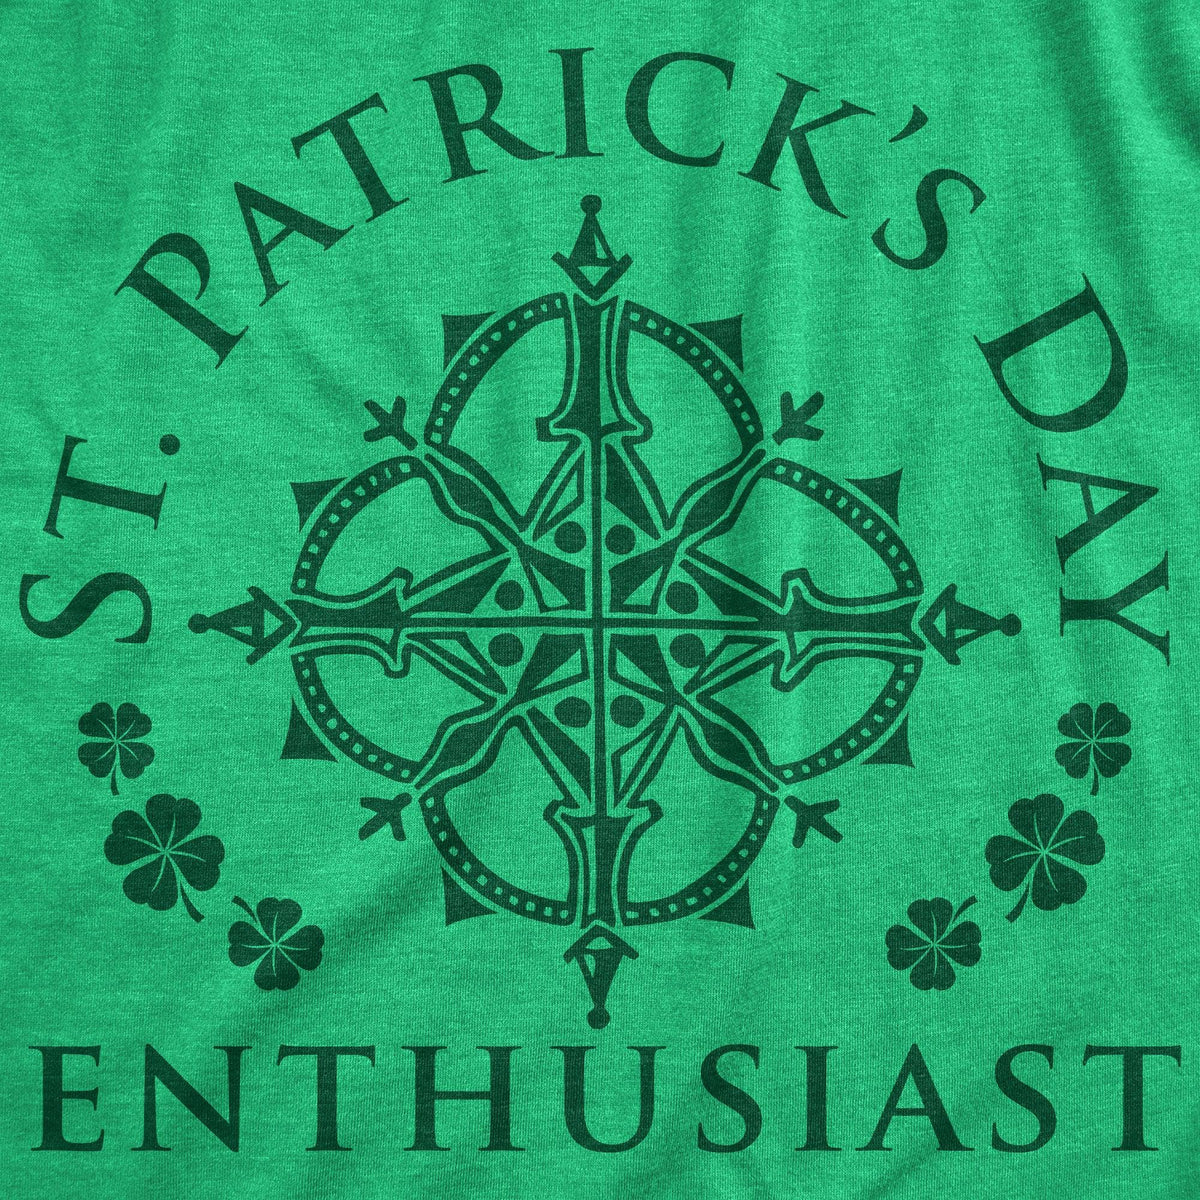 St. Patrick&#39;s Day Enthusiast Men&#39;s Tshirt  -  Crazy Dog T-Shirts